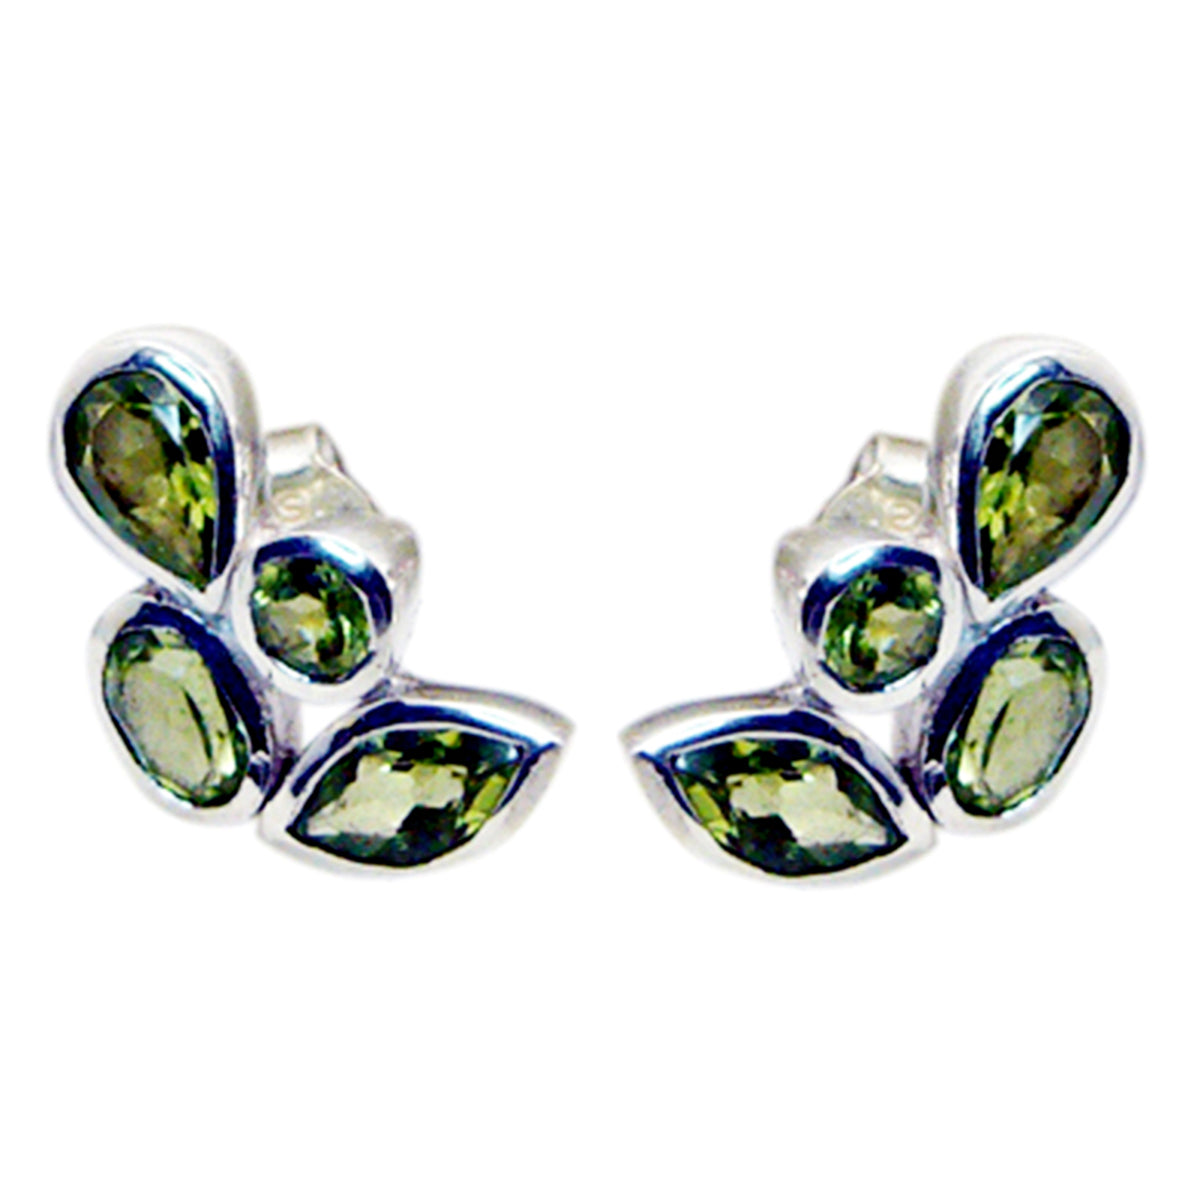 Riyo Genuine Gems multi shape Faceted Green Peridot Silver Earrings gift for friend